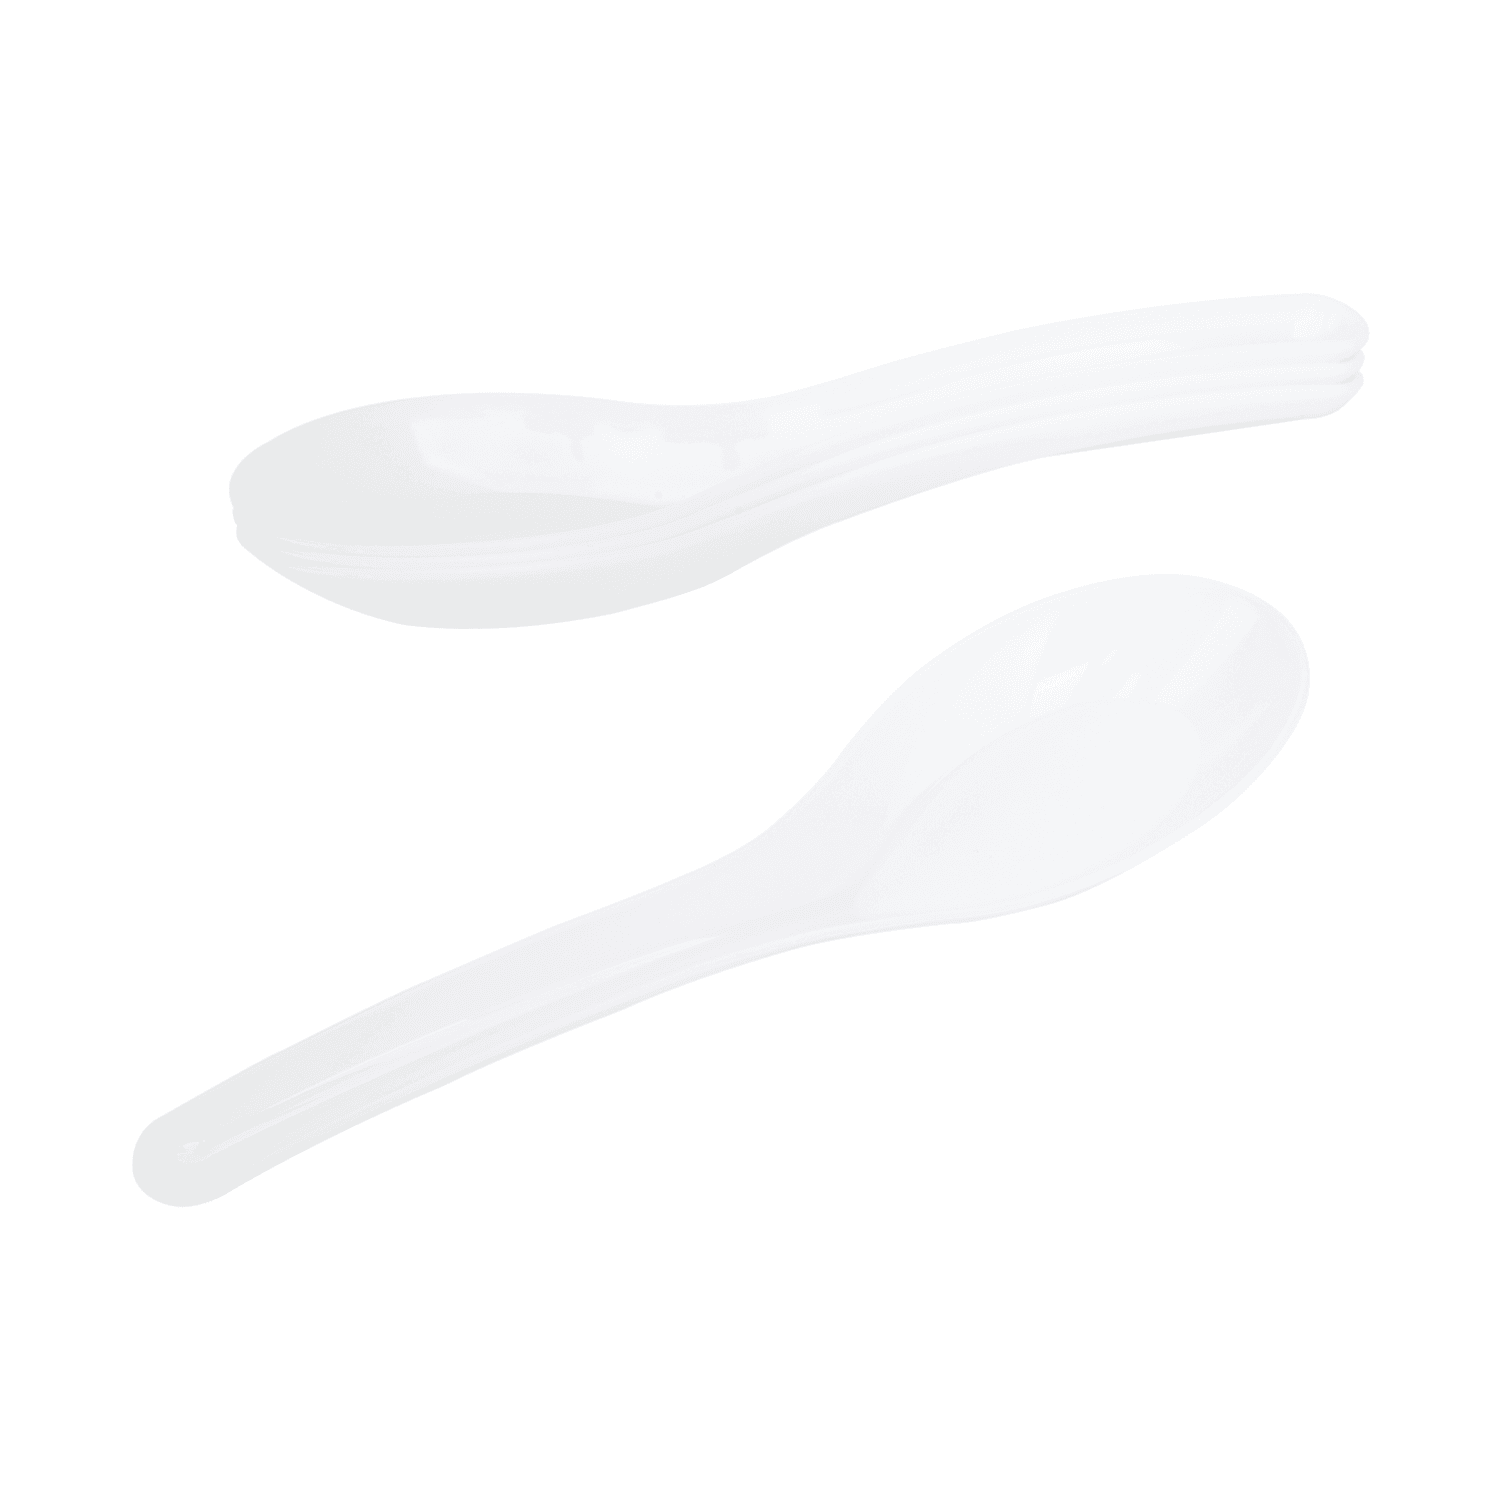 BESTONZON 50pcs Disposable Plastic Asian Soup Spoon/Appetizer Spoon/Chinese Won Soup Spoon 11.5cm,White 